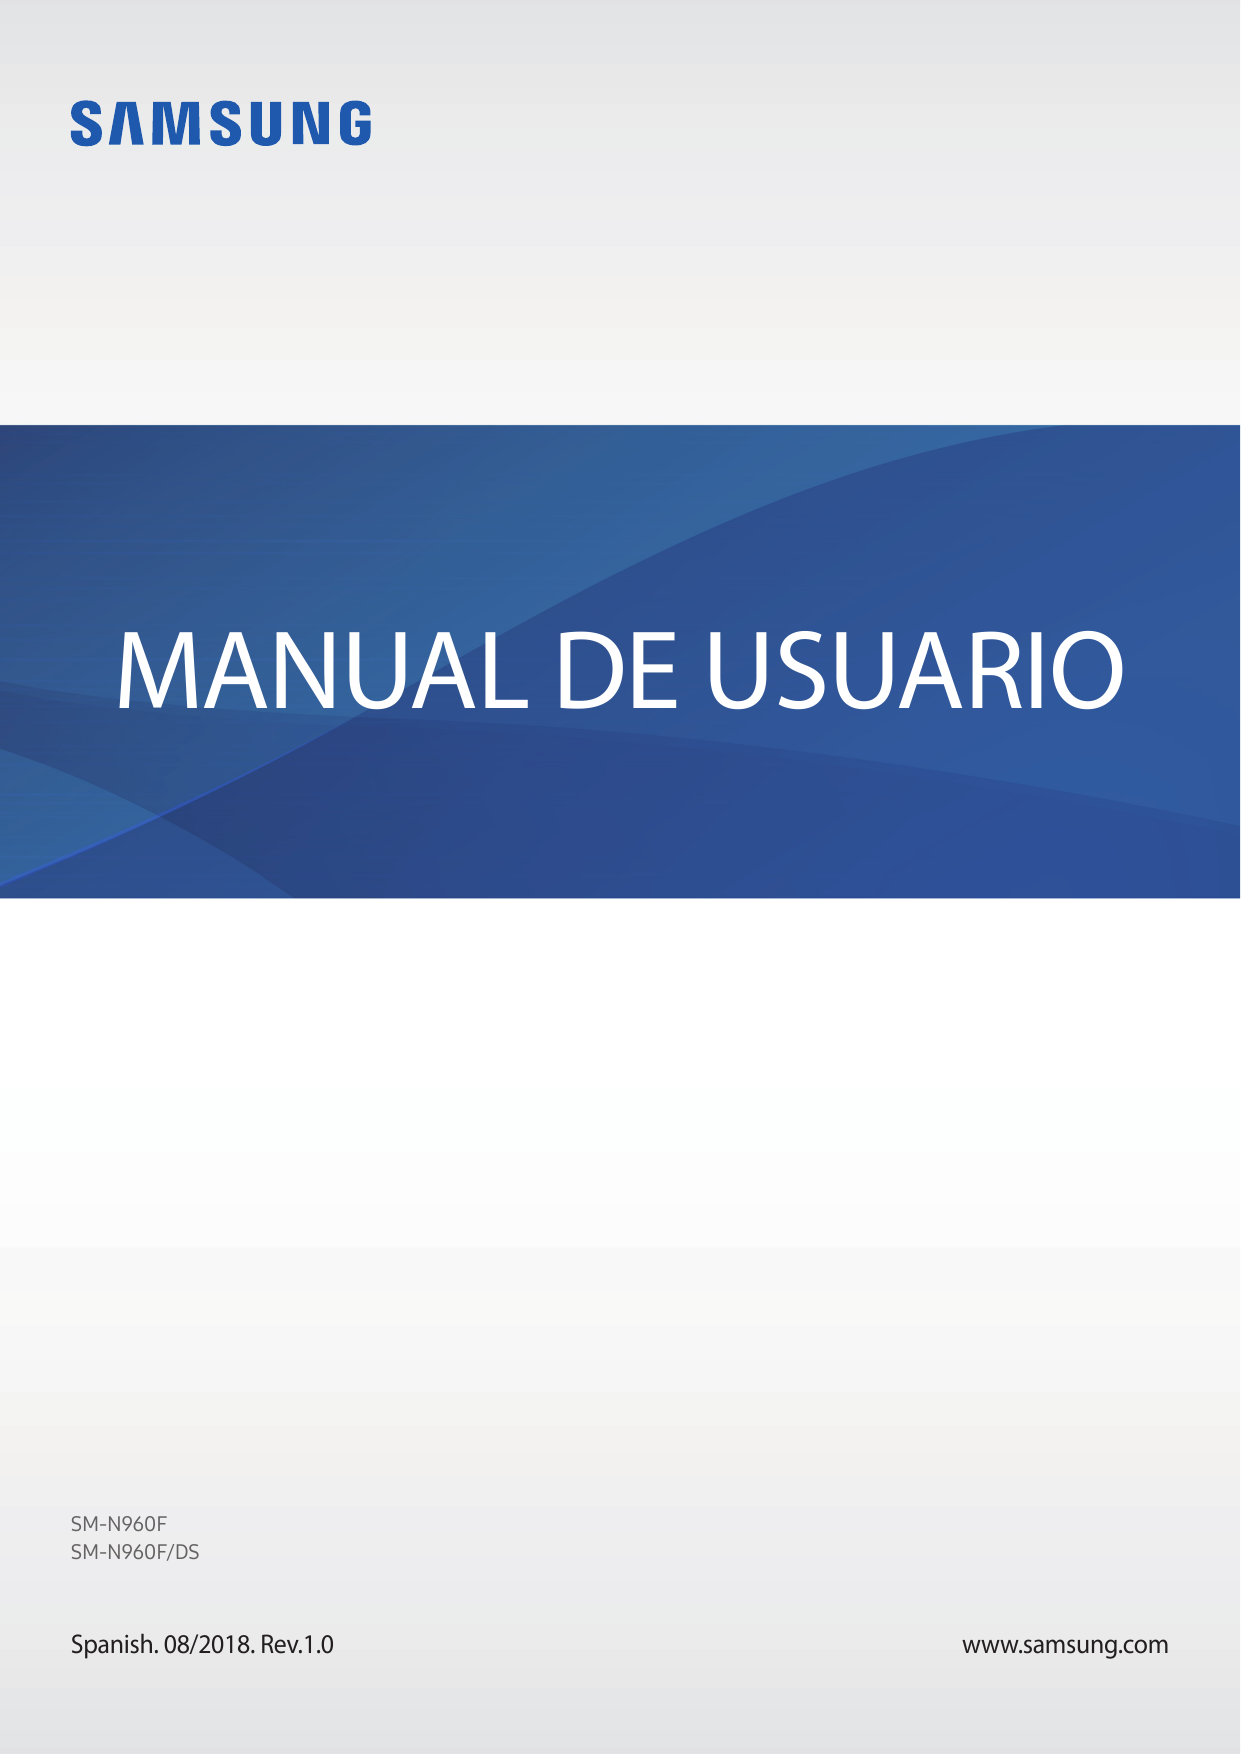 MANUAL DE USUARIOSM-N960FSM-N960F/DSSpanish. 08/2018. Rev.1.0www.samsung.com